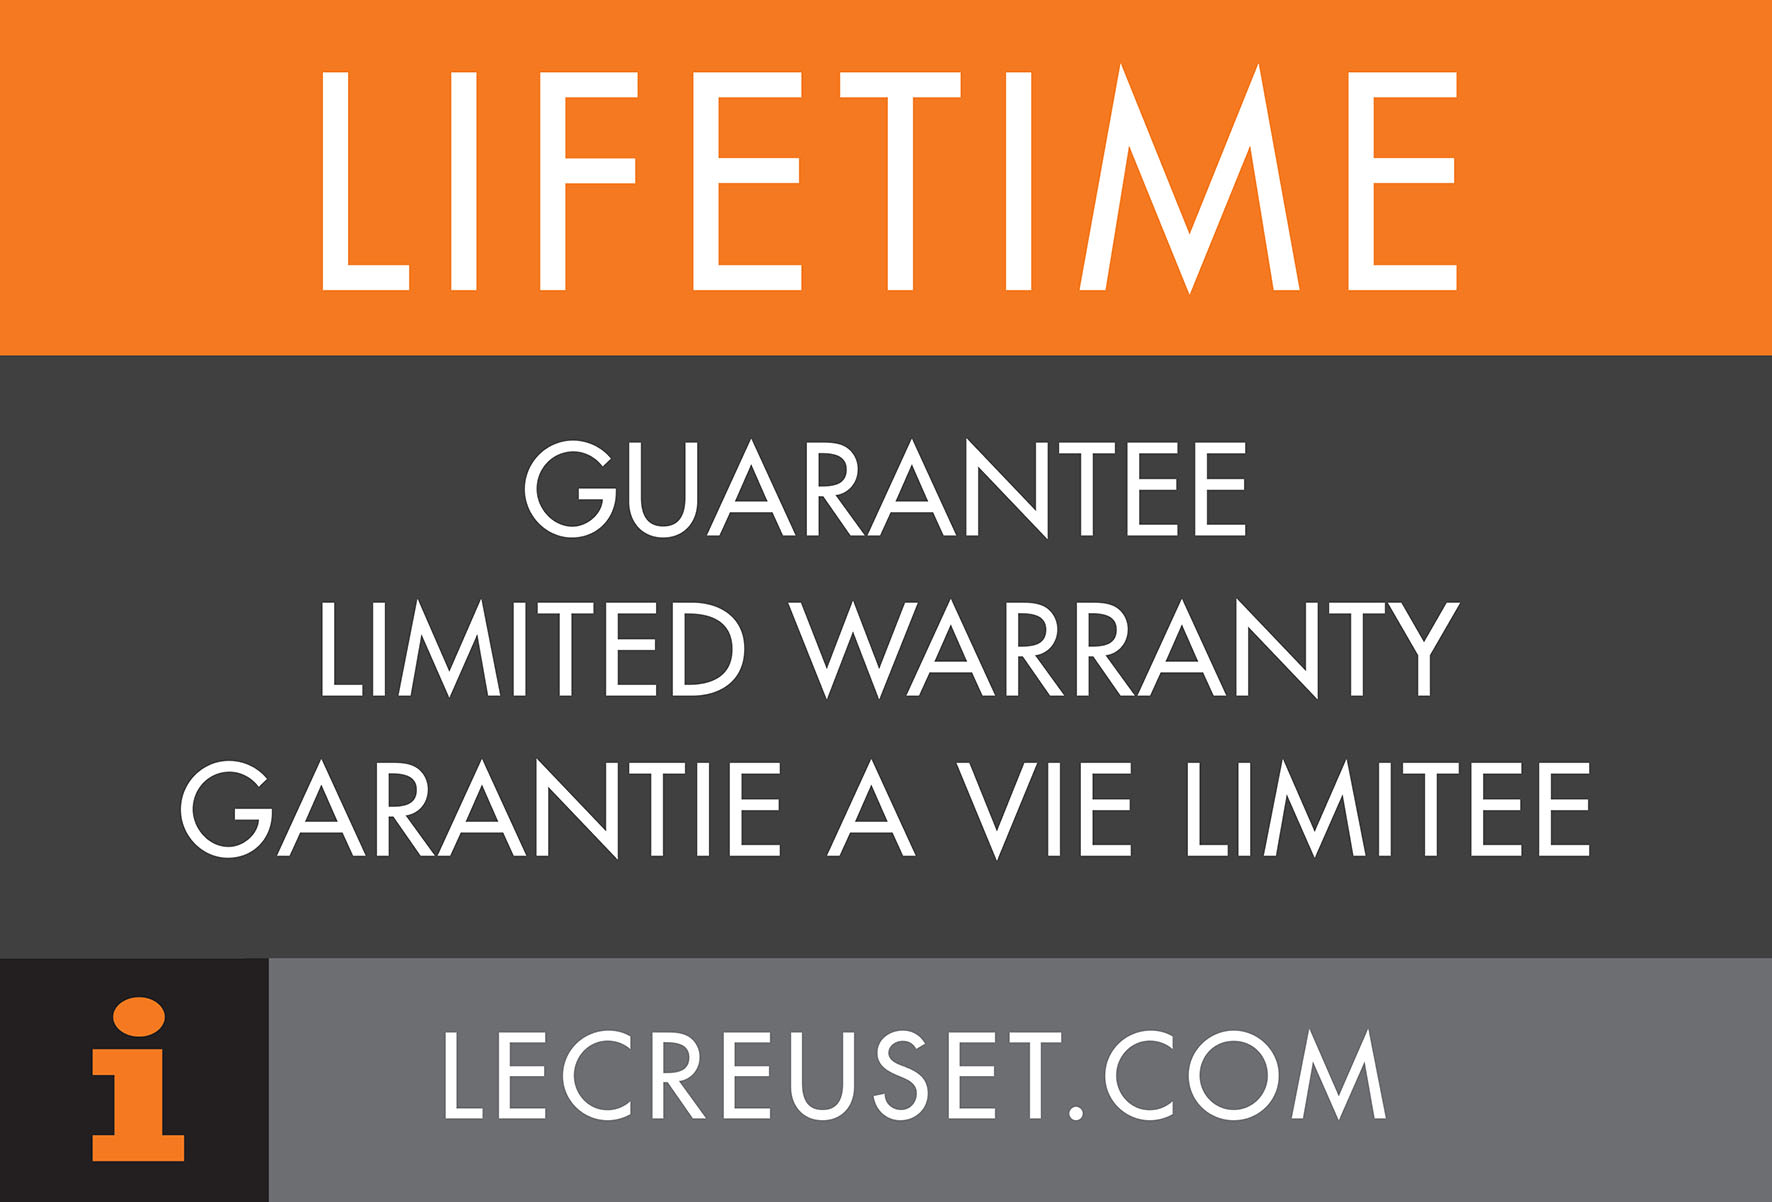 Lifetime guarantee, limited warranty, garantie a vie limitee, lecreuset.com